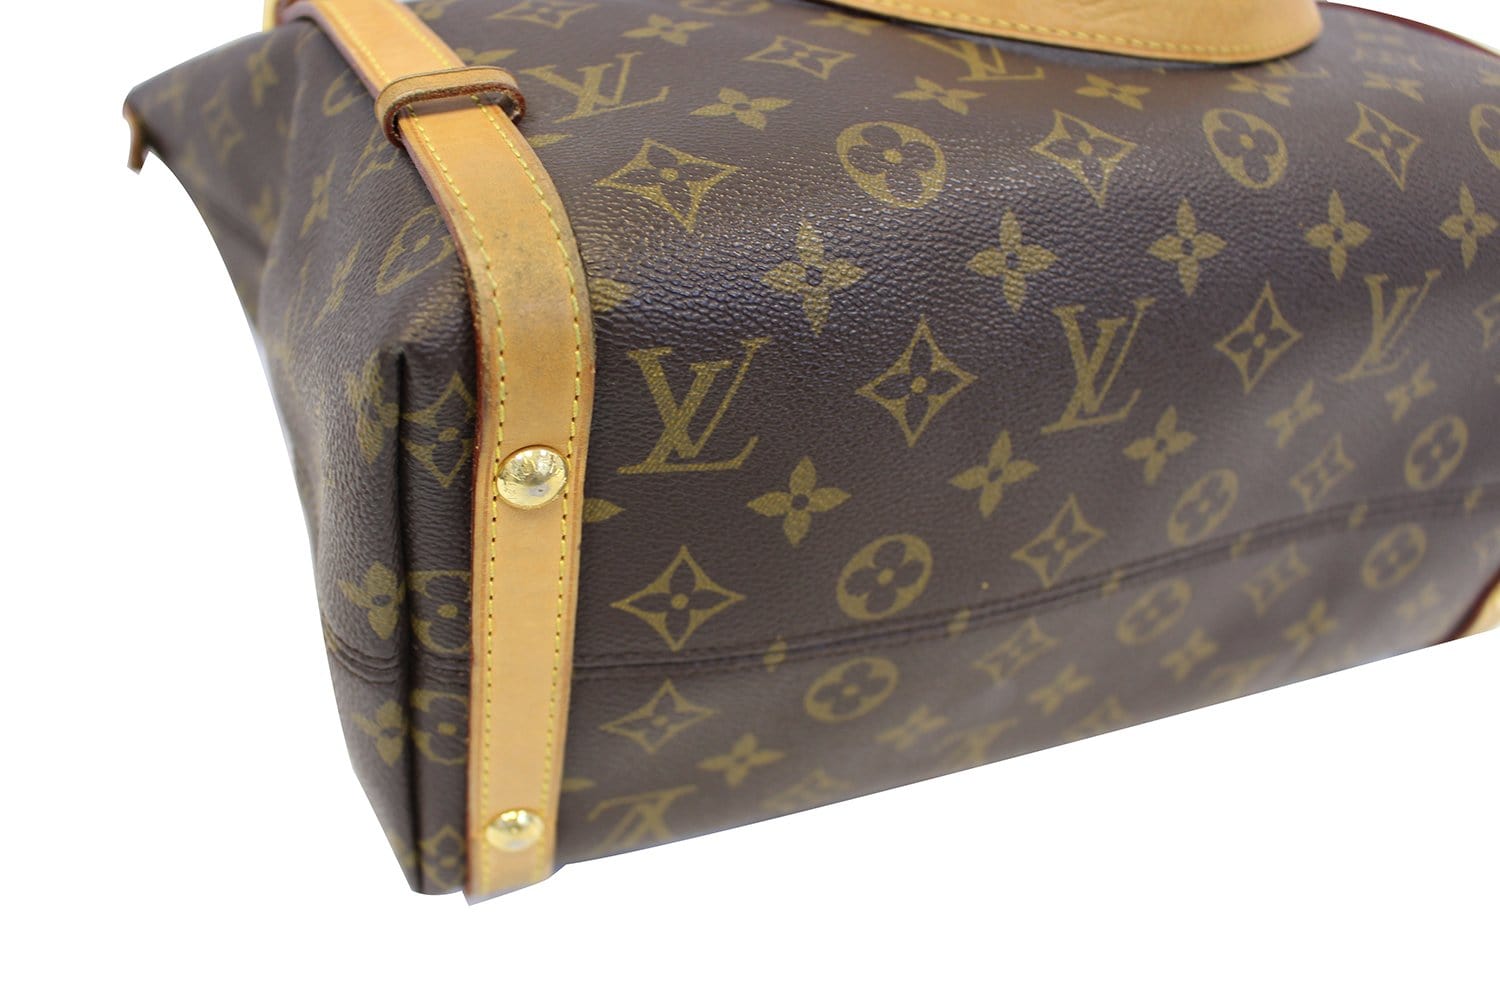 Vuitton - Bag - Monogram - 2 - Tuileries - Tote - Way - Louis